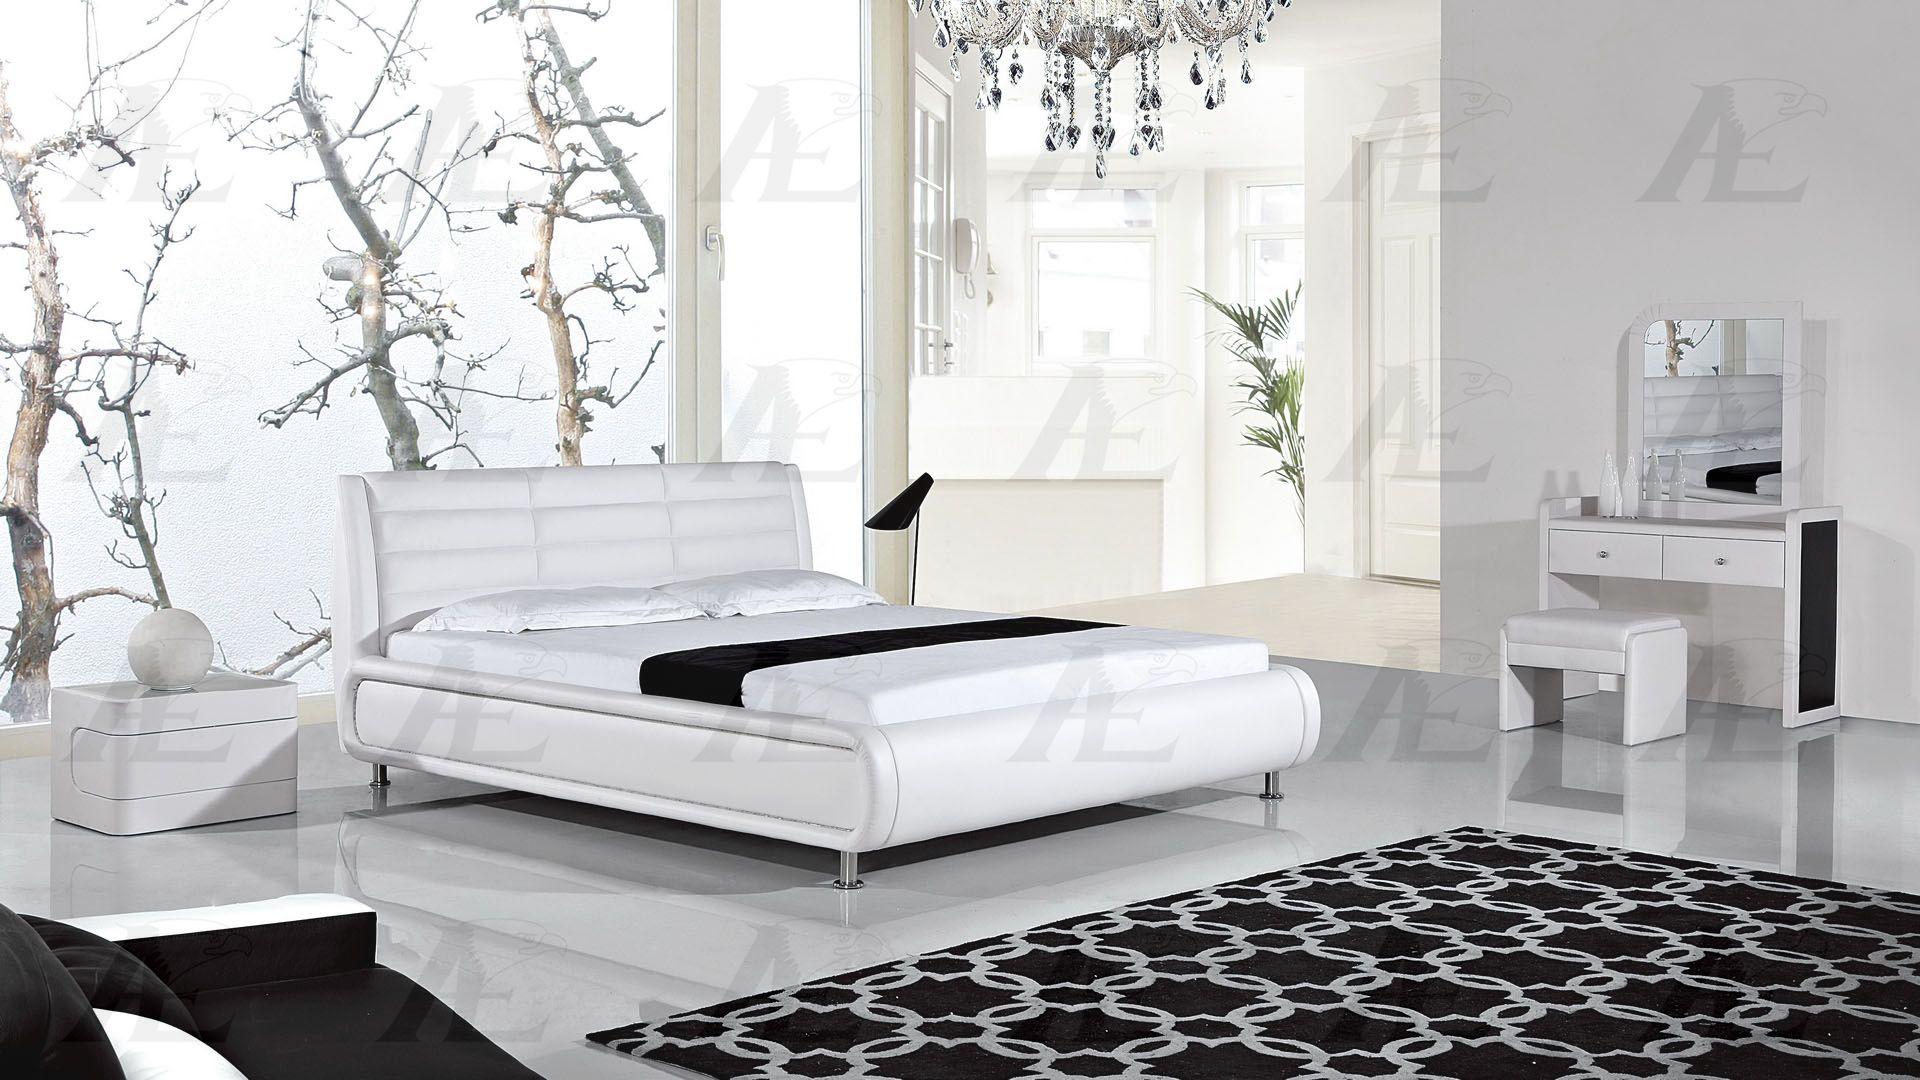 

    
American Eagle Furniture B-D019-W Platform Bed White B-D019-W-CK
